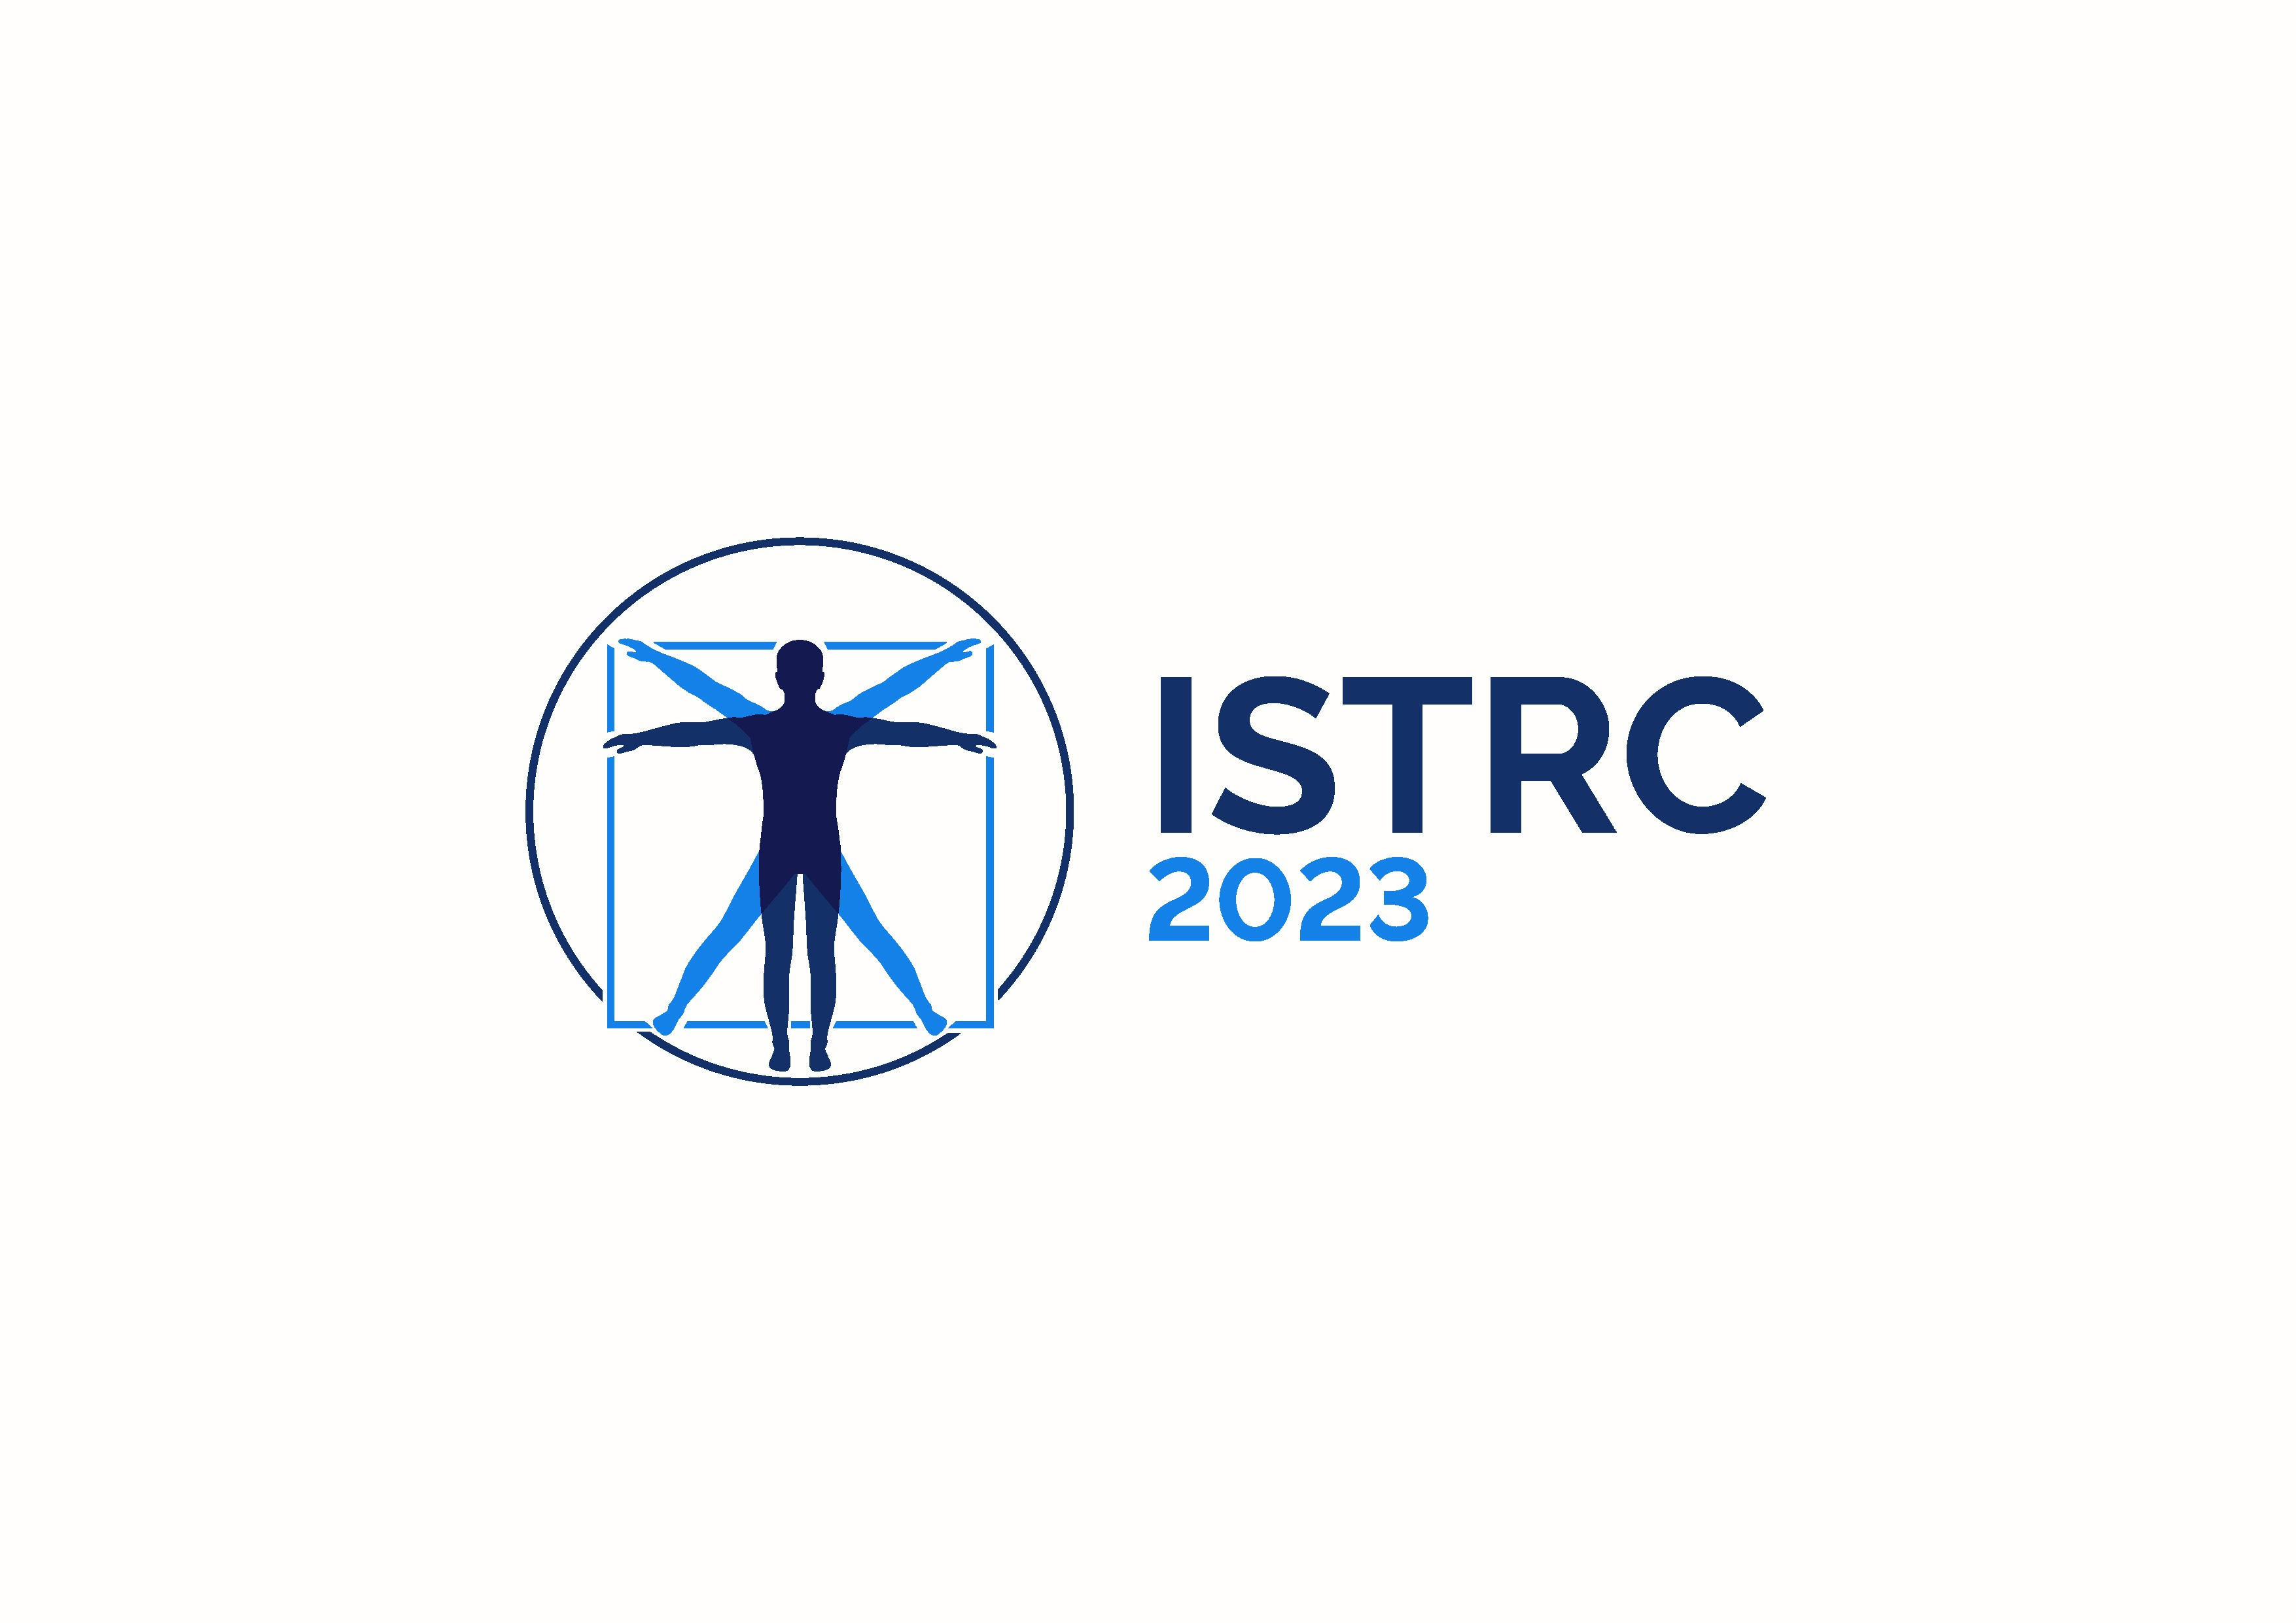 image of ISTRC 2023 logo